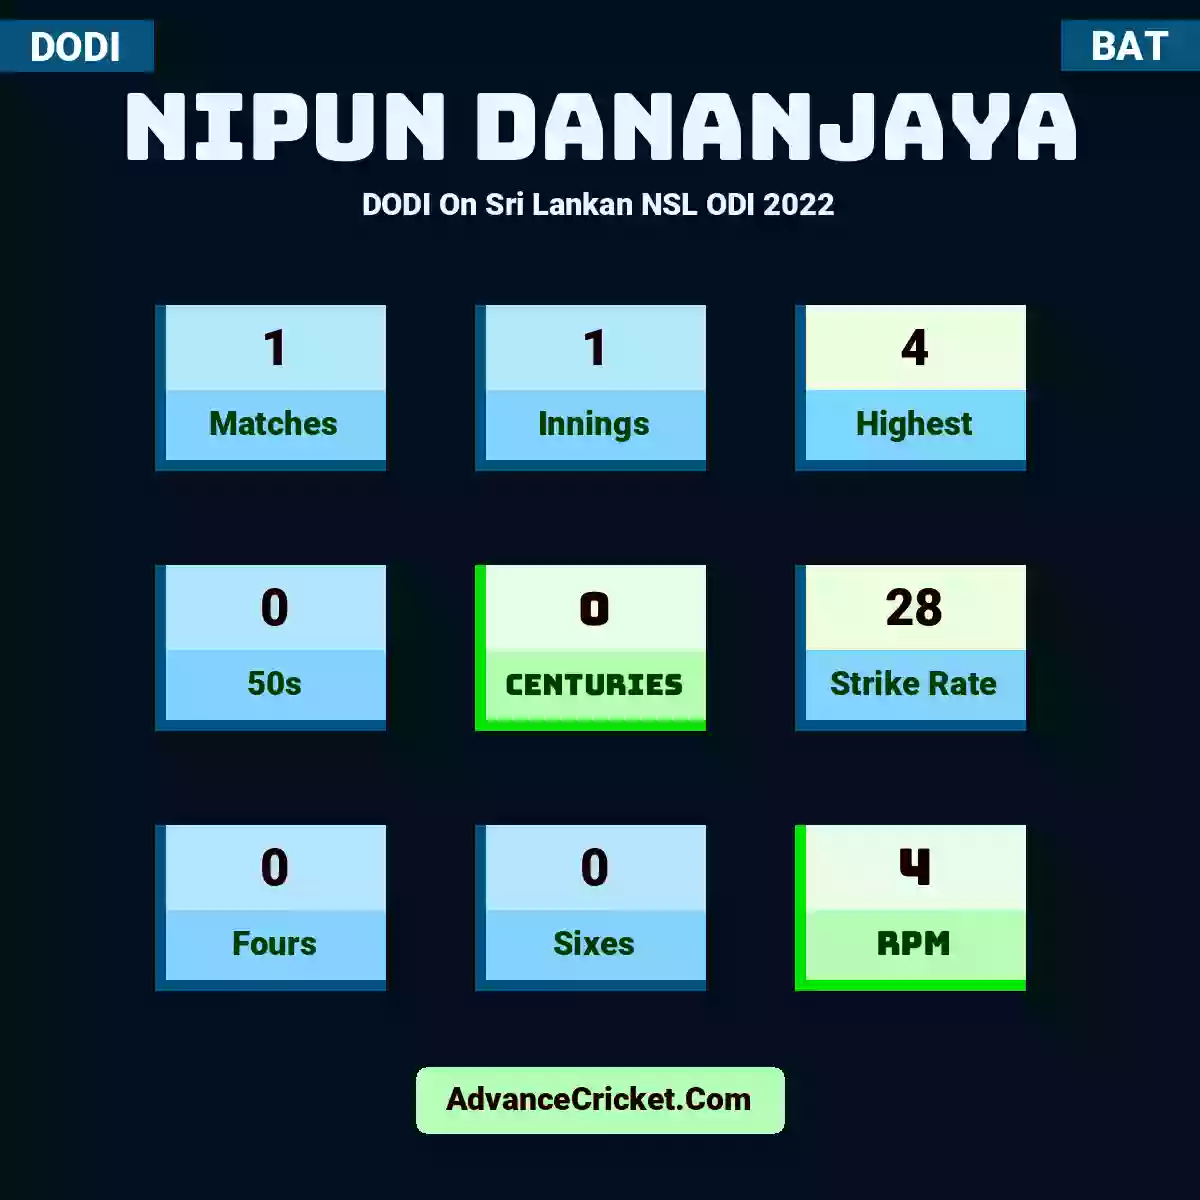 Nipun Dananjaya DODI  On Sri Lankan NSL ODI 2022, Nipun Dananjaya played 1 matches, scored 4 runs as highest, 0 half-centuries, and 0 centuries, with a strike rate of 28. N.Dananjaya hit 0 fours and 0 sixes, with an RPM of 4.